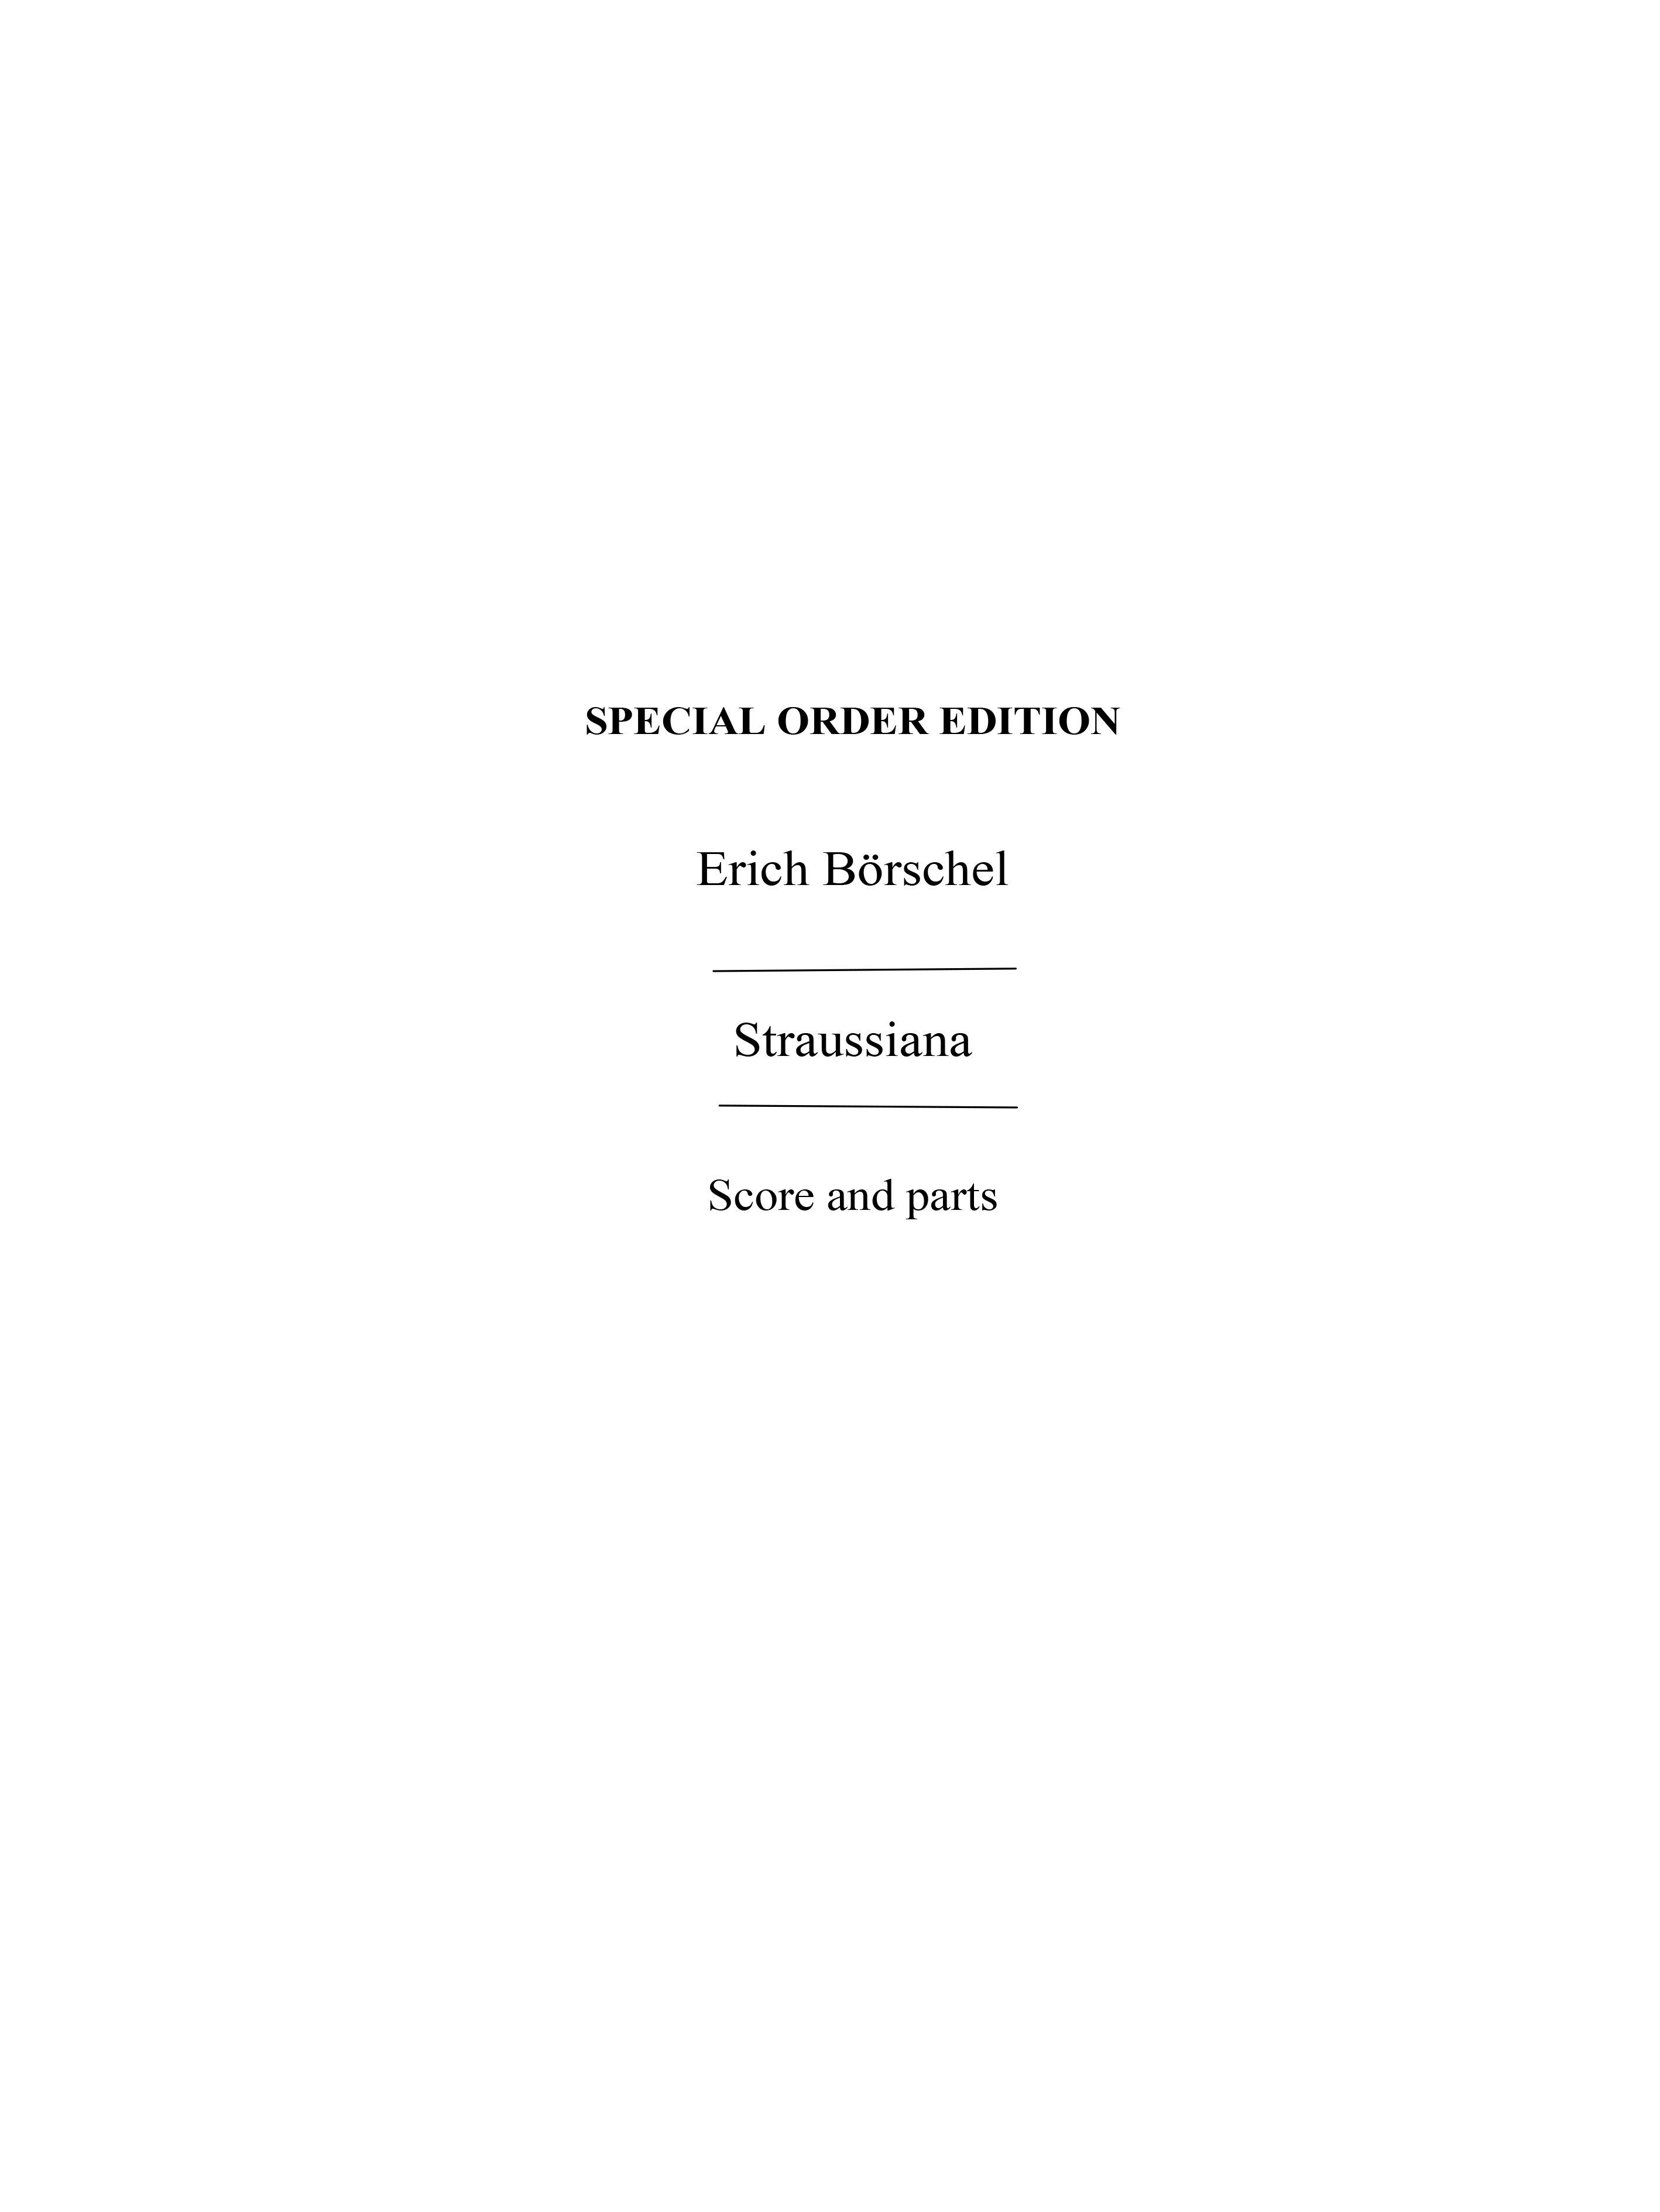 Erich Brschel: Borschel  E Straussiana: Orchestra: Score and Parts